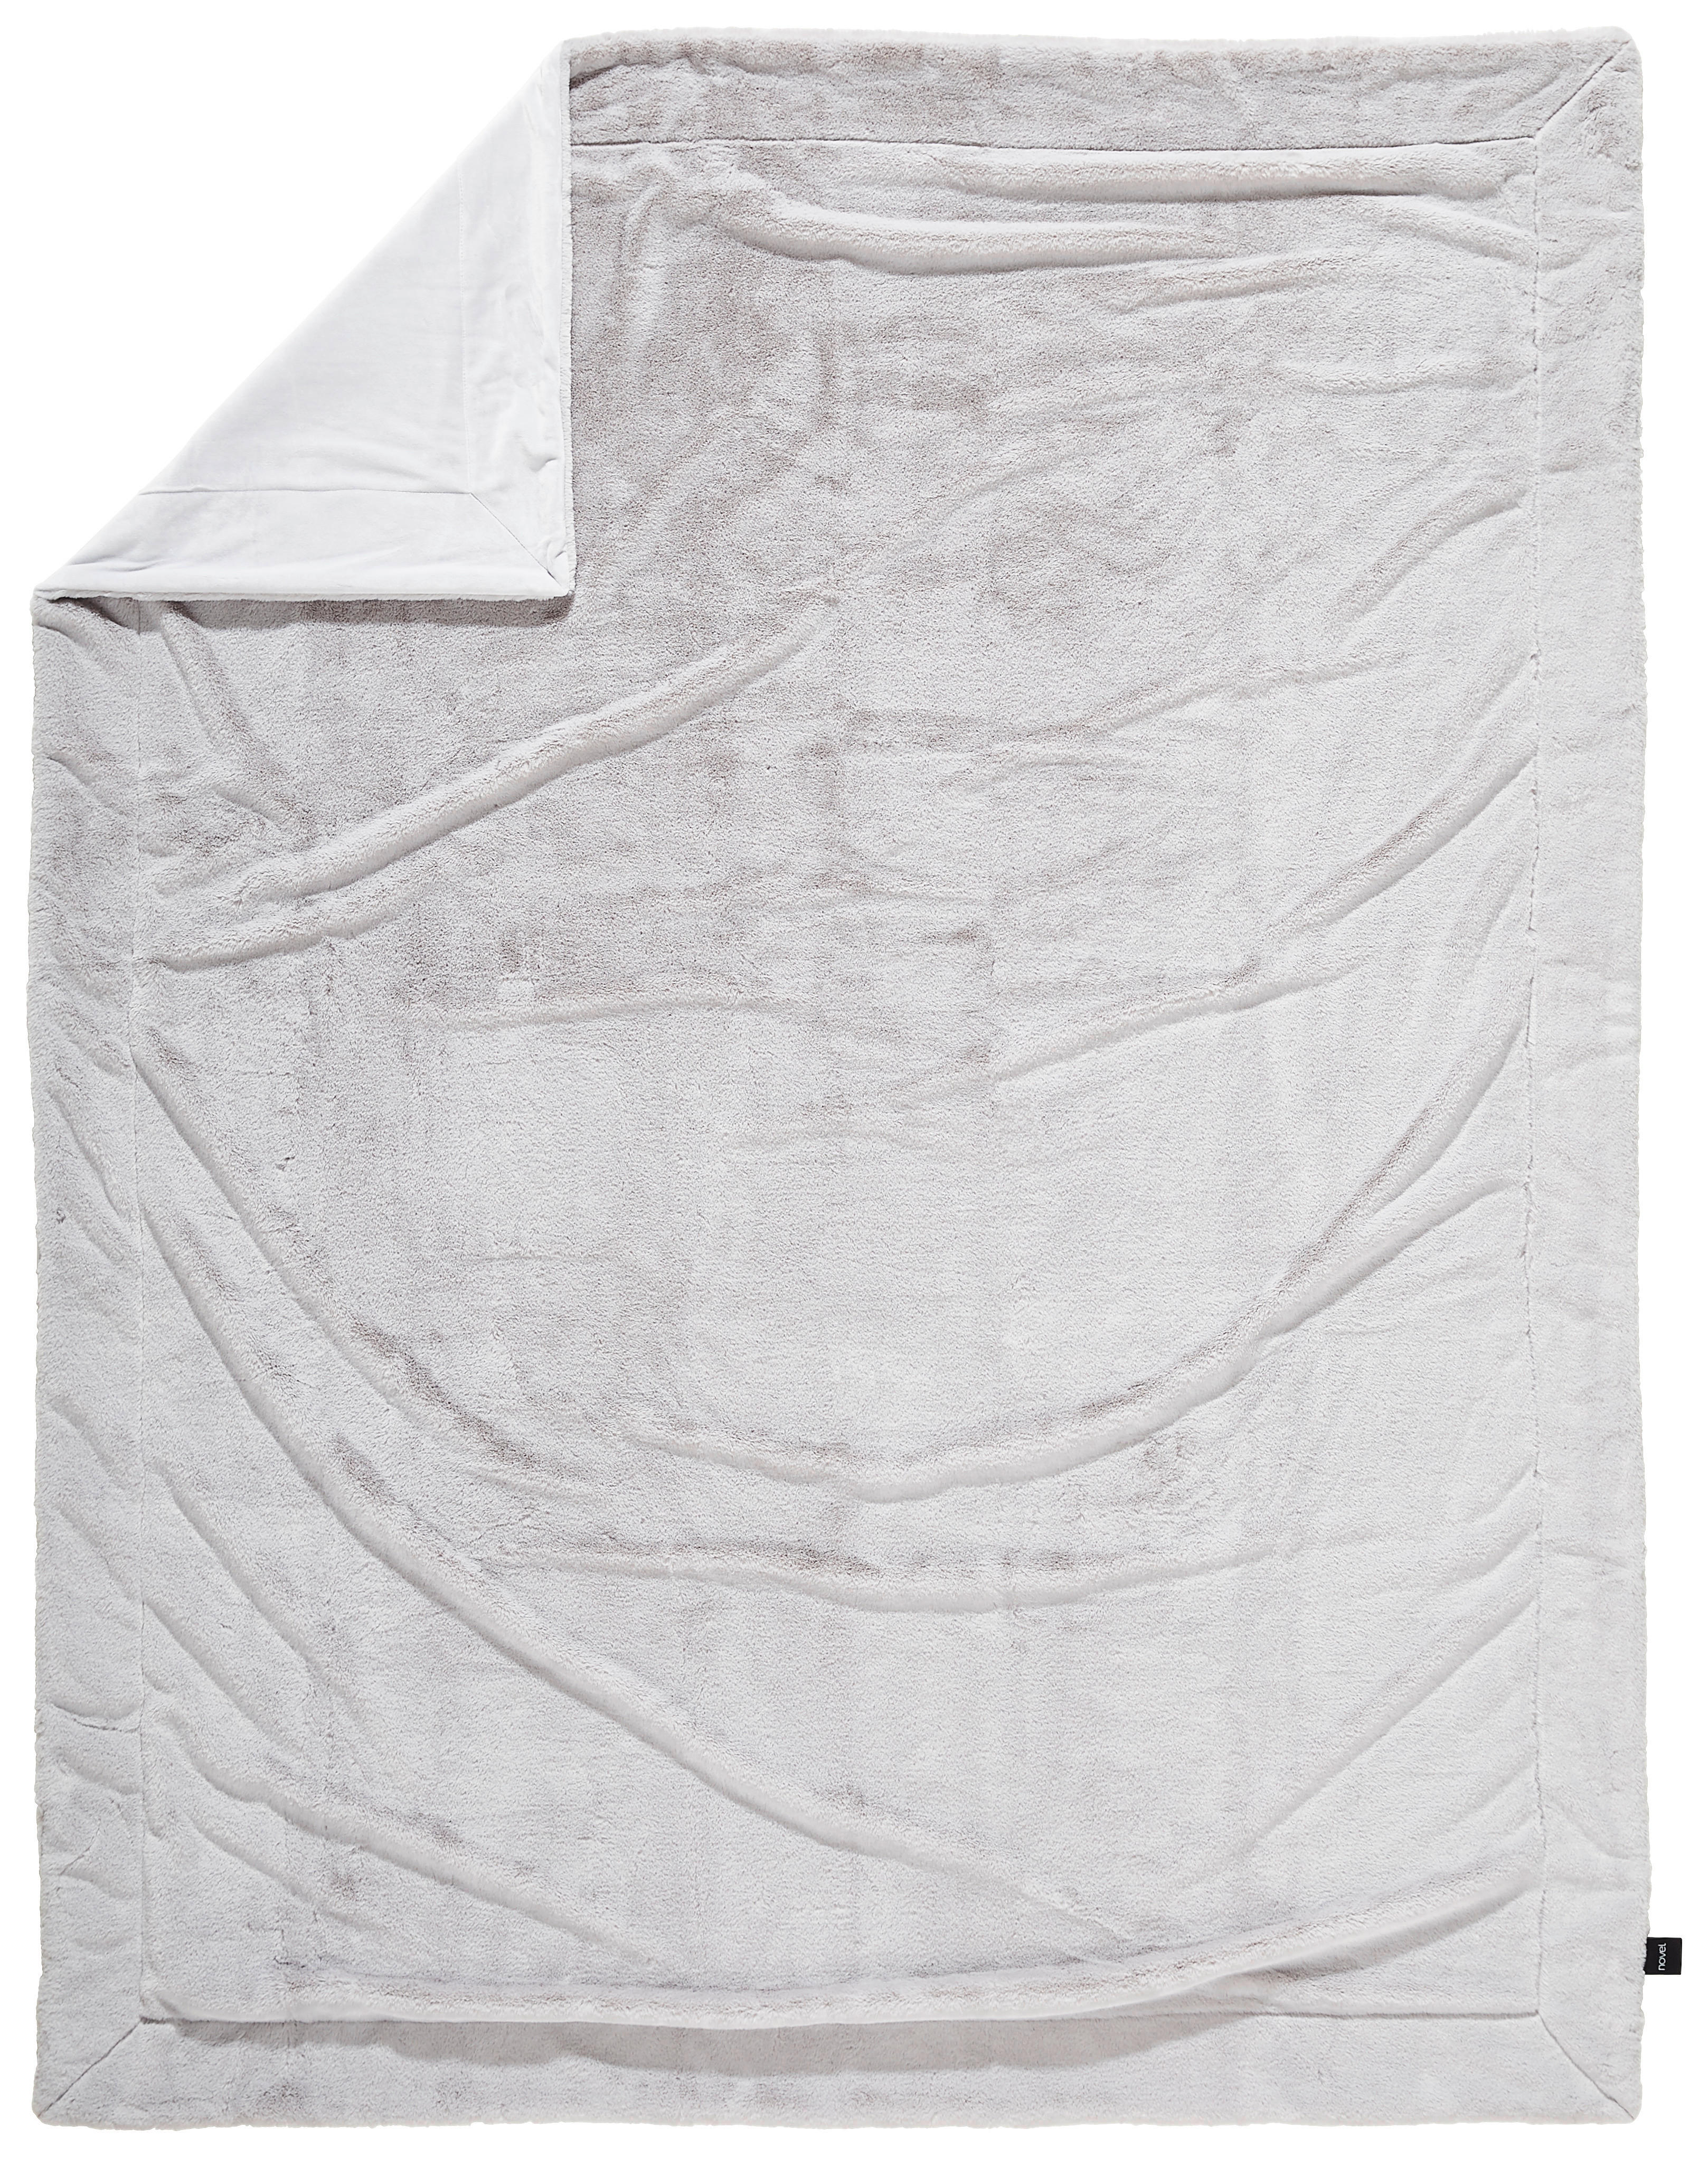 FELLDECKE 150/200 cm  - Silberfarben, Design, Textil (150/200cm) - Novel